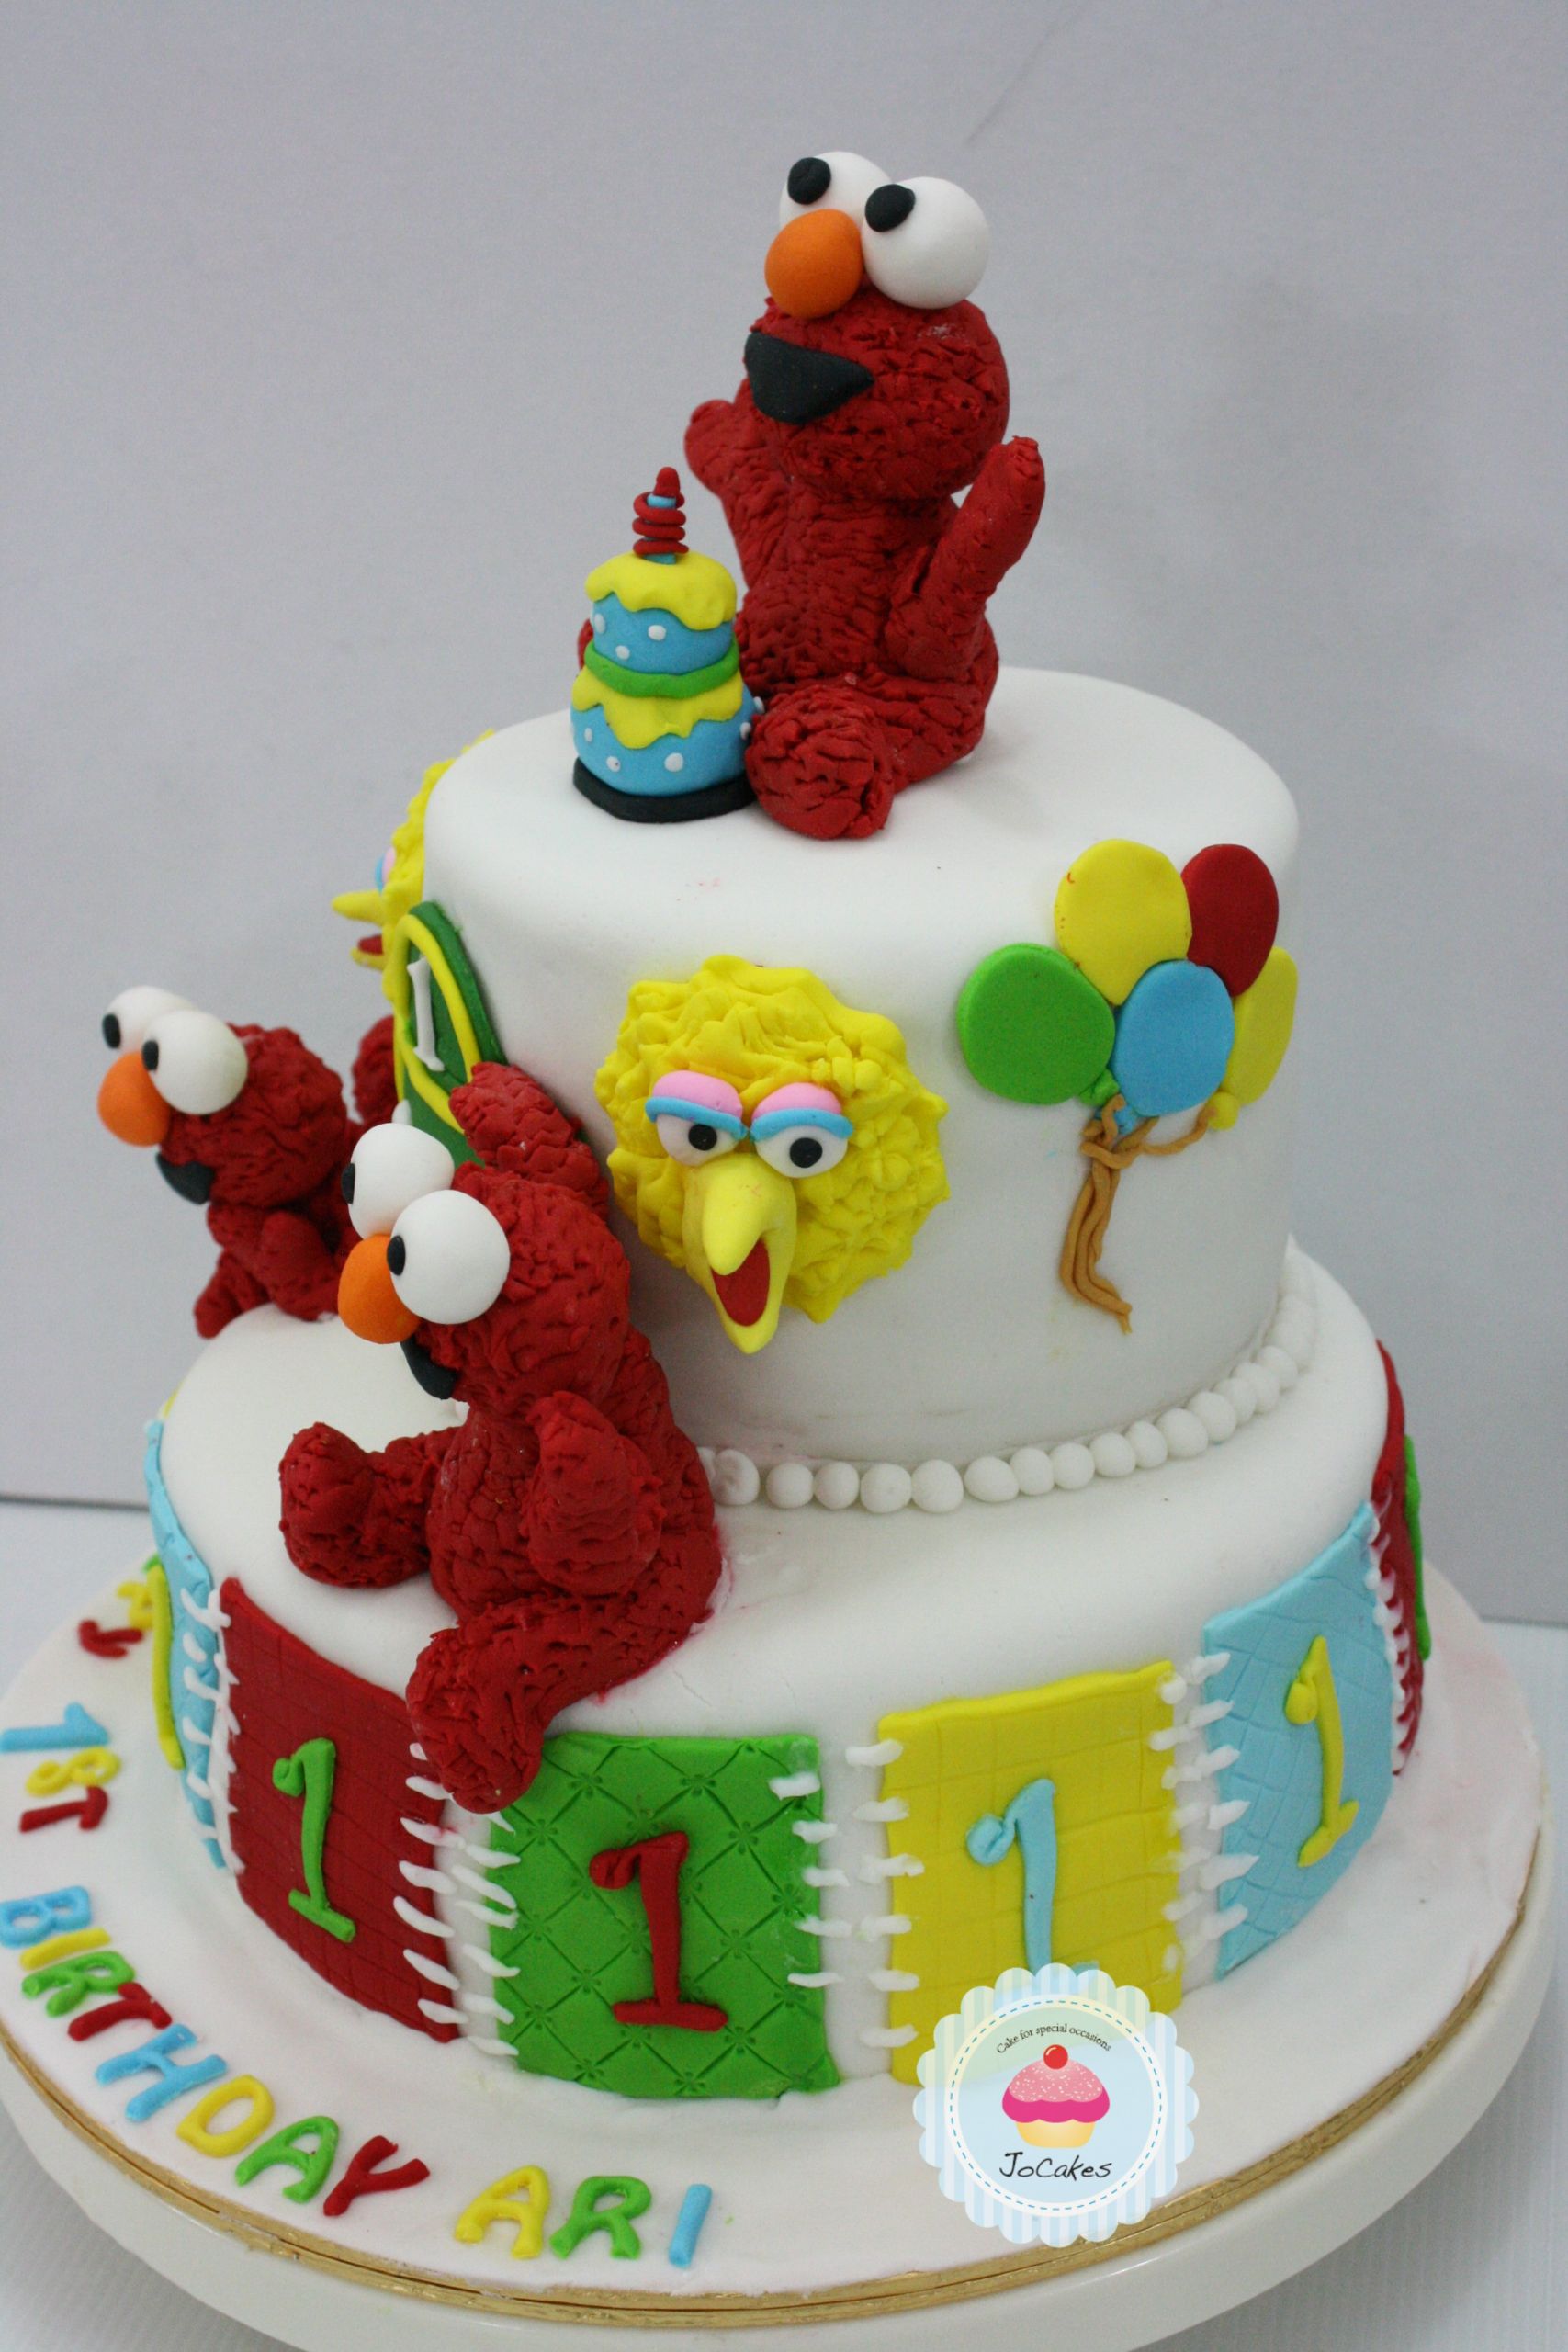 Elmo Birthday Cakes
 Elmo cake and cupcakes for Ari 1st birthday